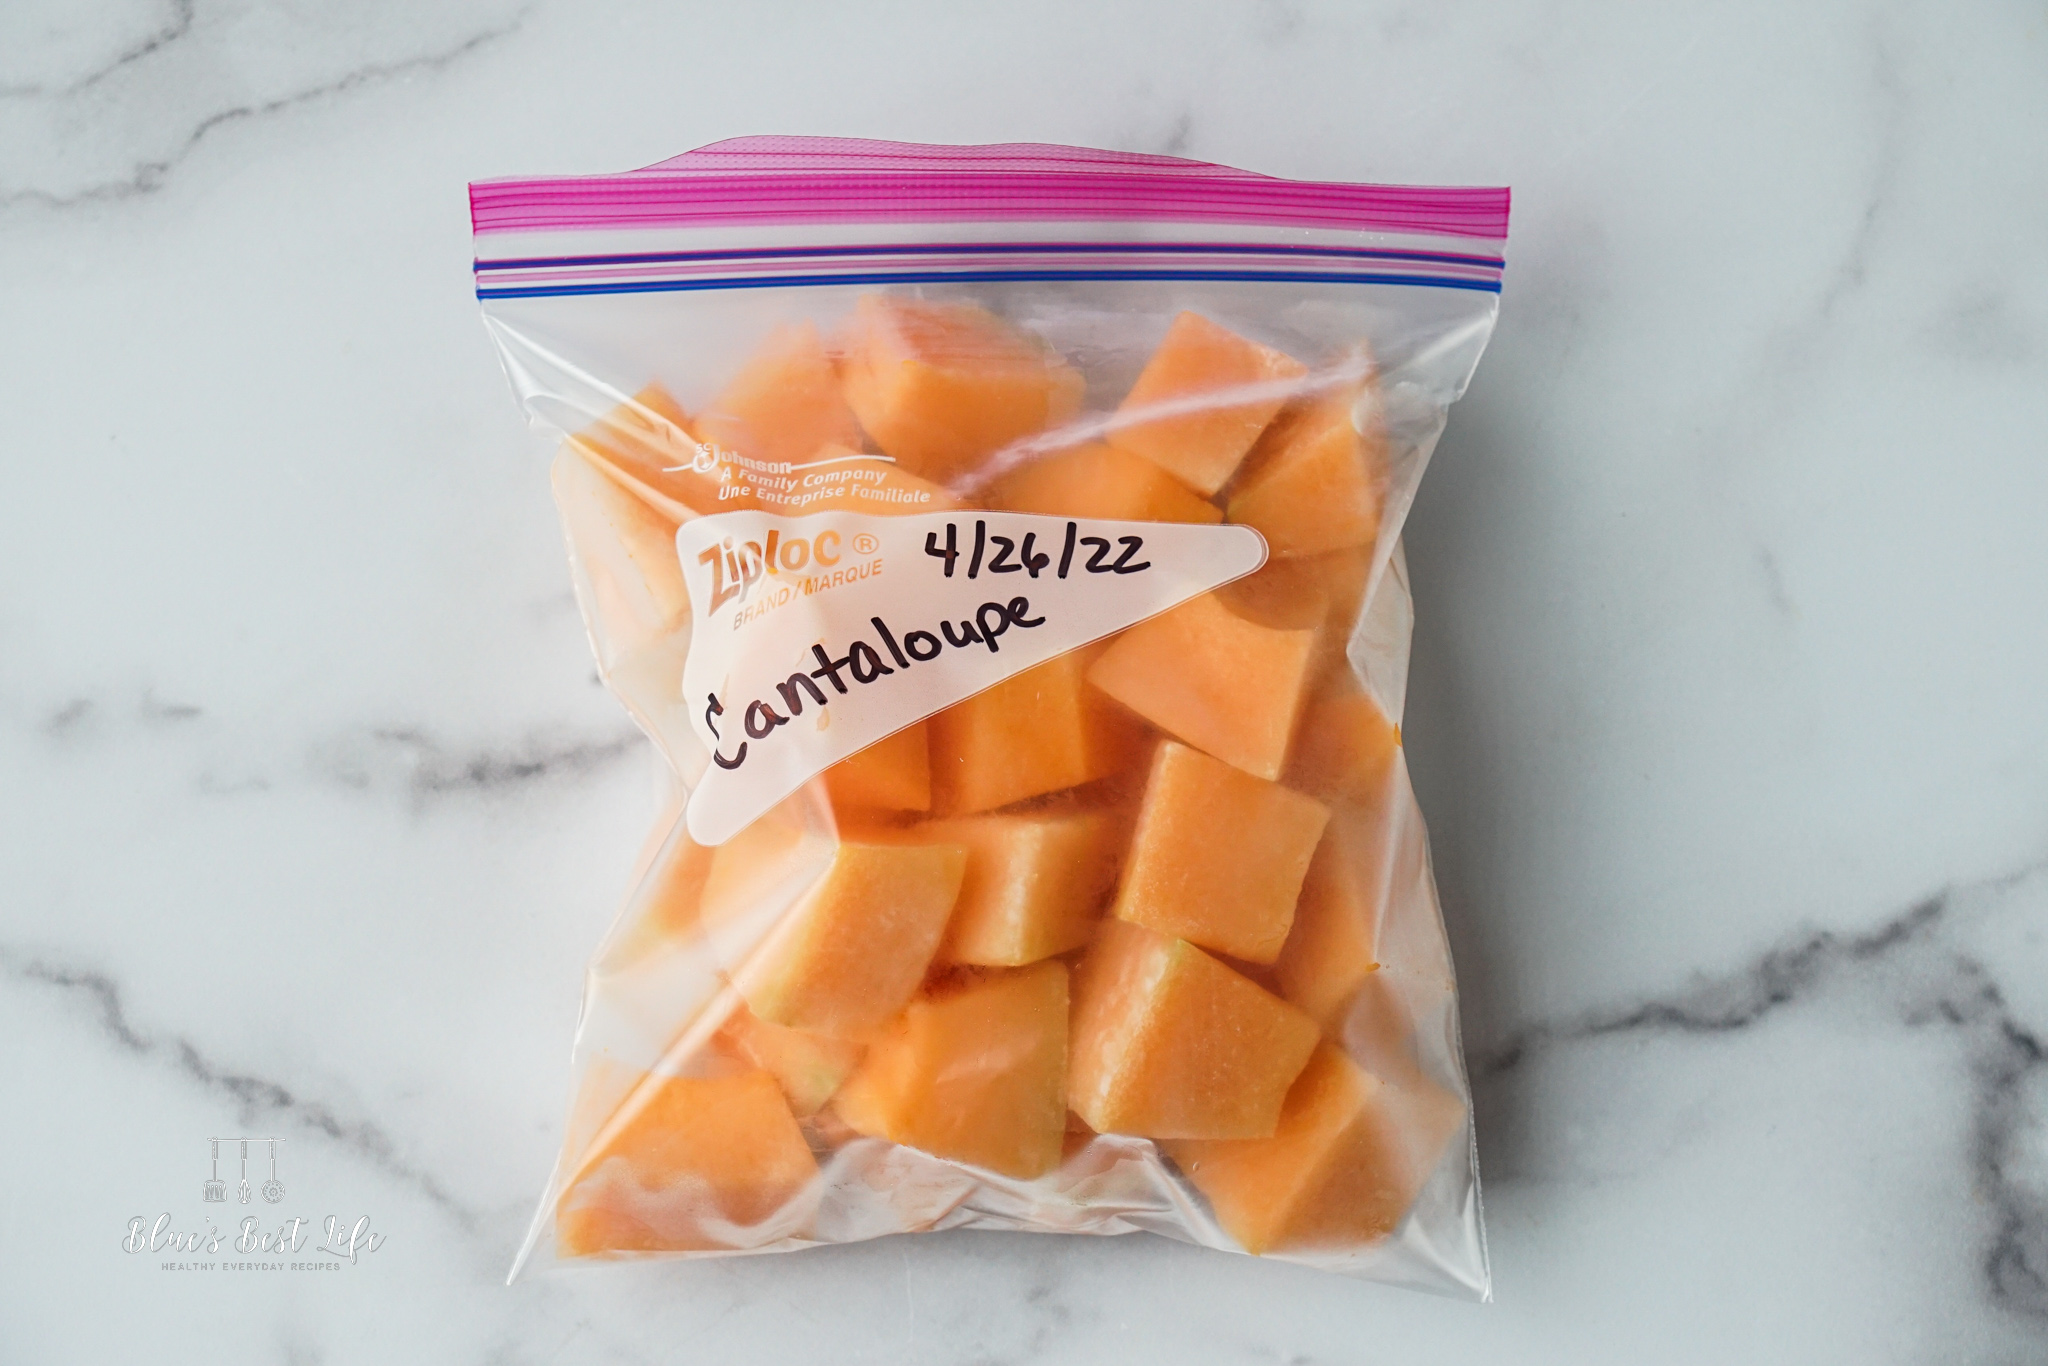 The cantaloupe chunks in a freezer bag.  